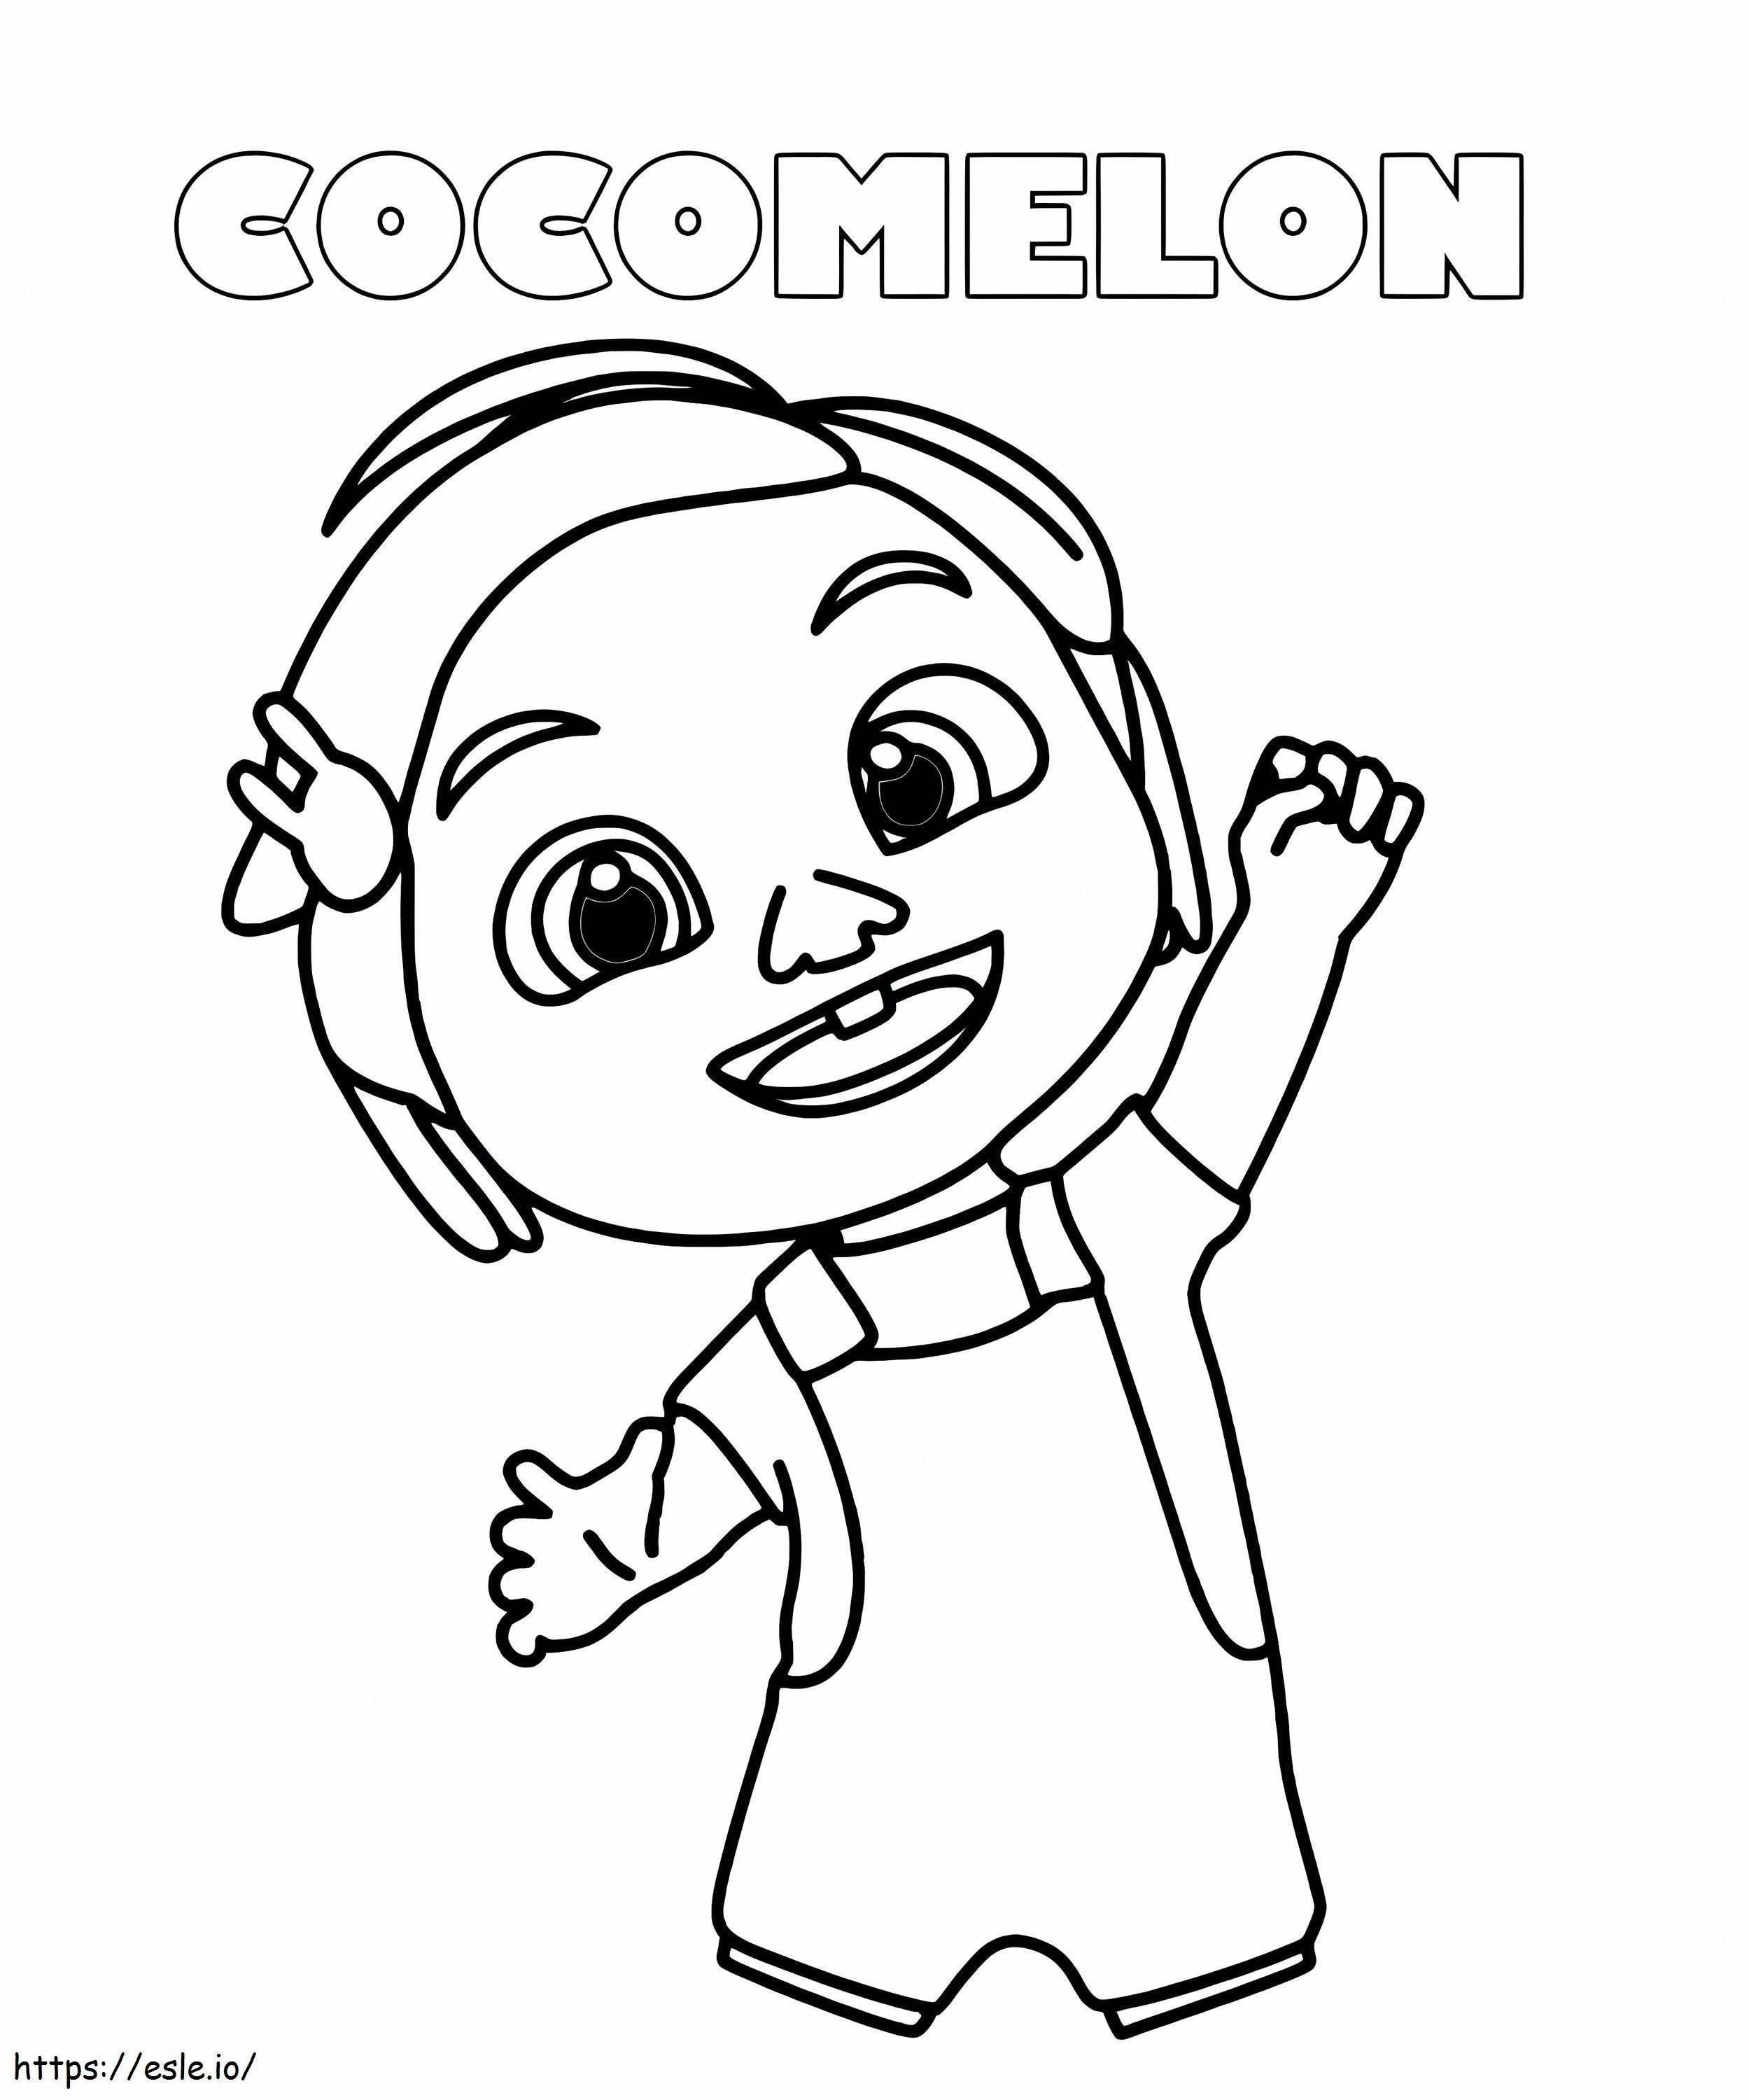 Nina Cocomelon coloring page